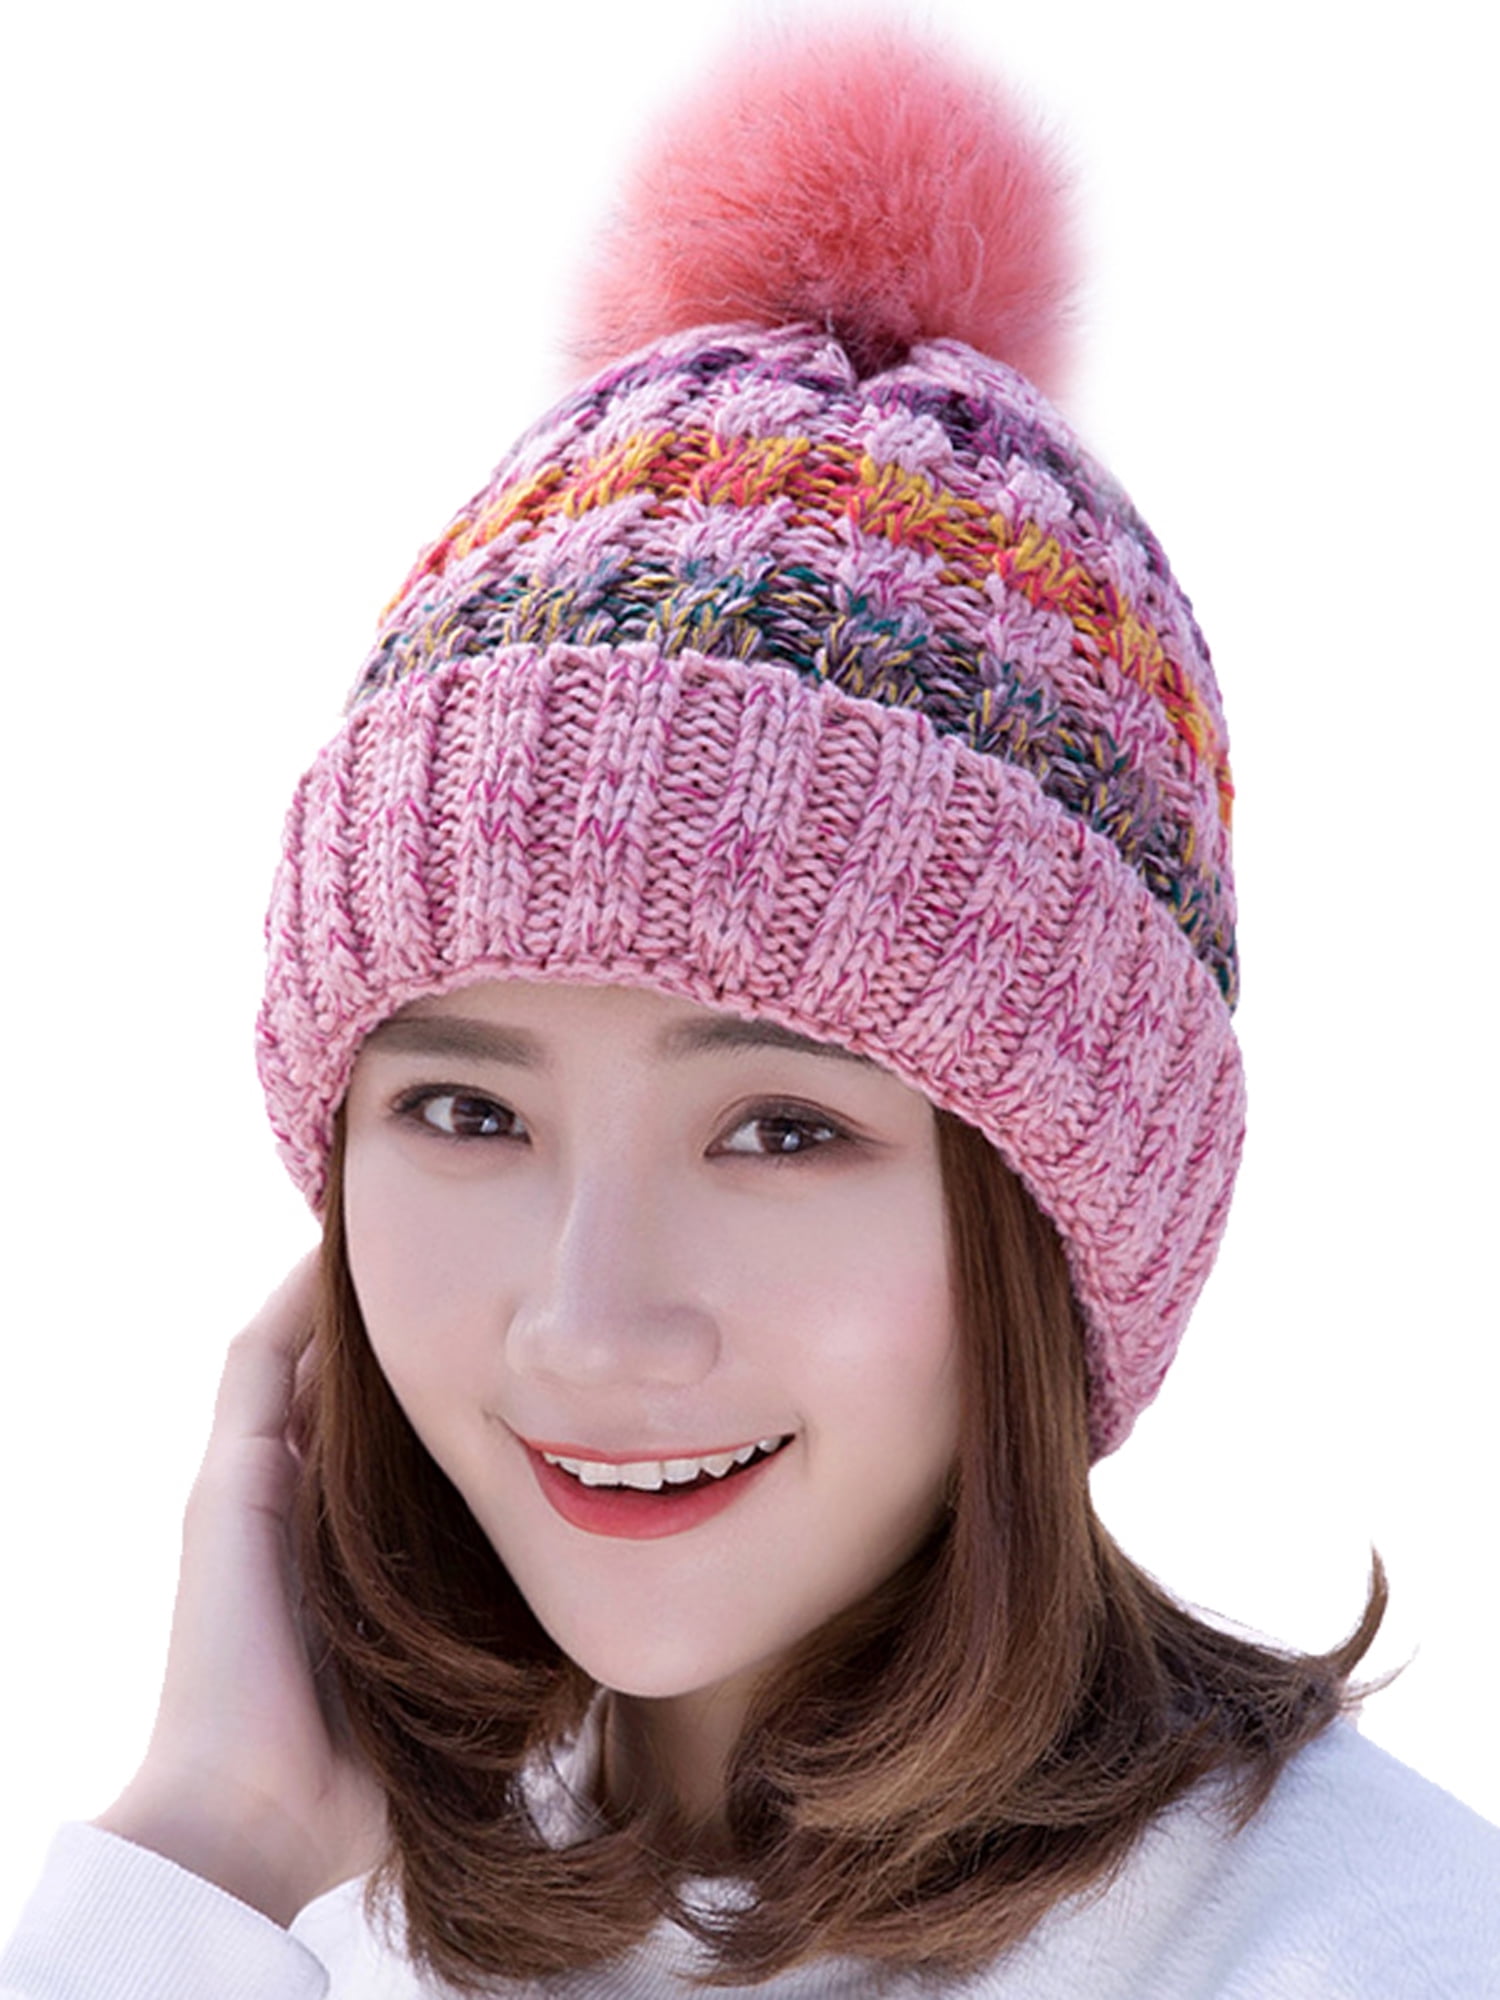 HATOOZE Beanie Hat Winter Knit Hat for Women Girls Double Layer Fleece Lining Bobble Hat with Detachable Faux Fur Pom Pom